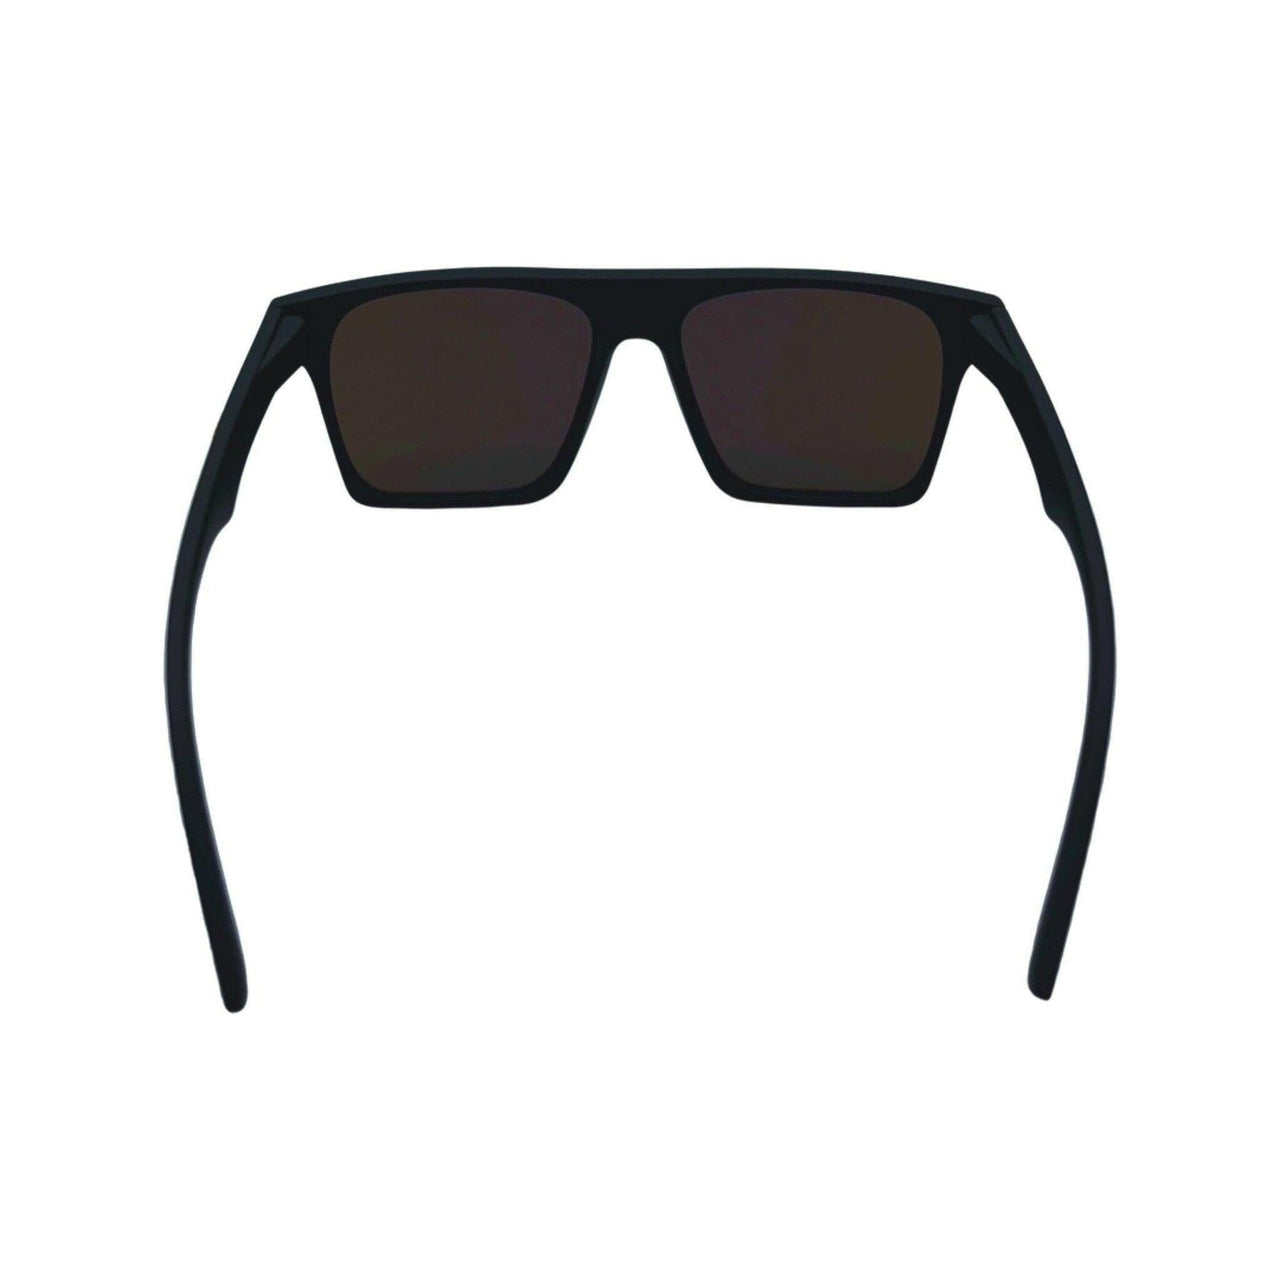 Silver Party Shades Polarized Lens Sunglasses